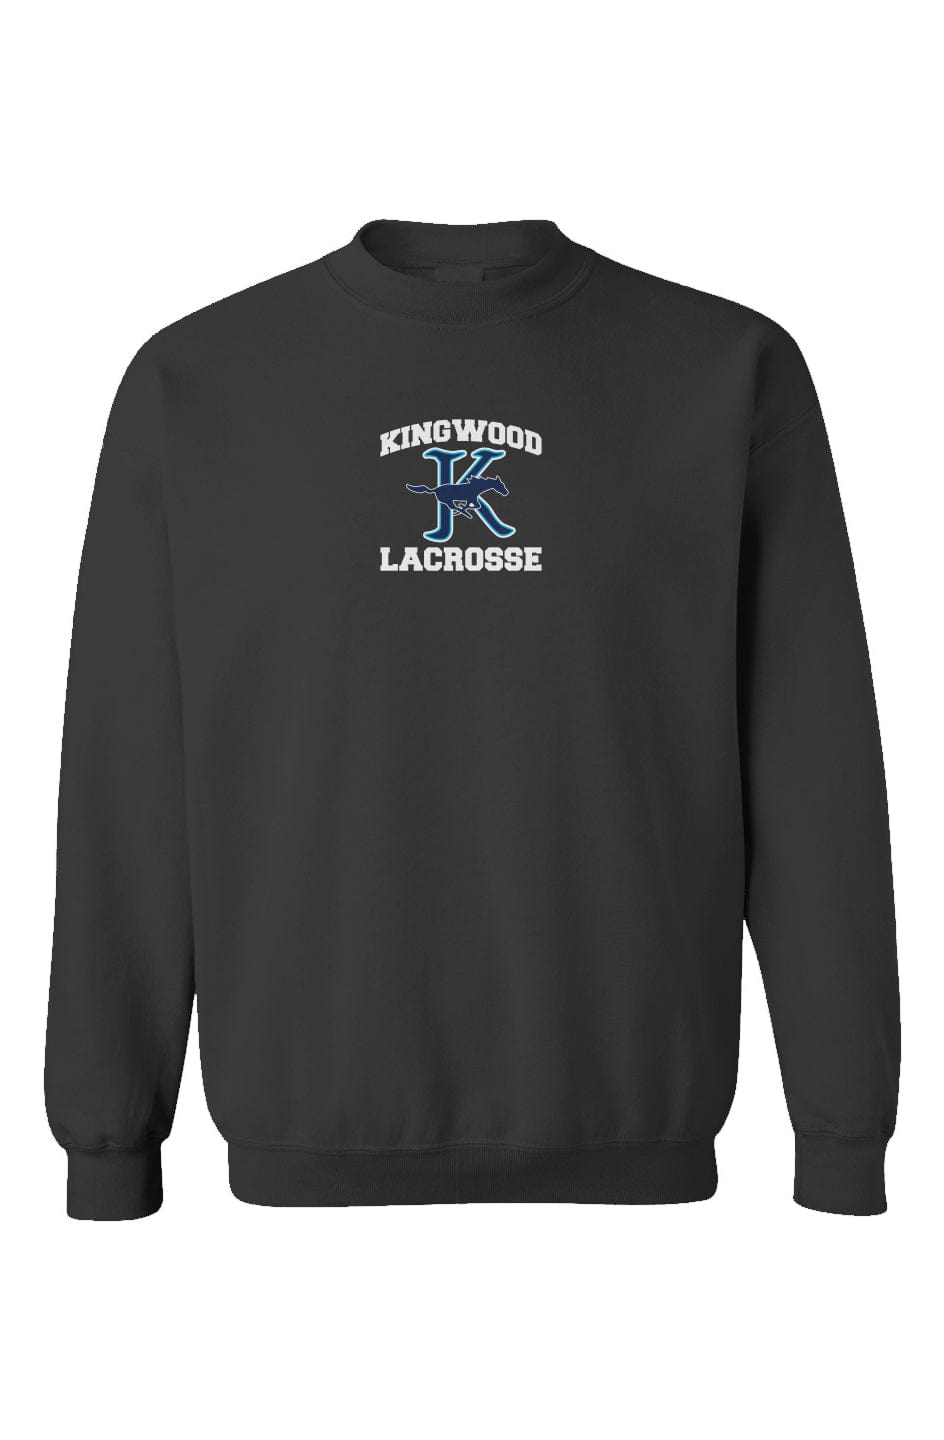 Kingwood Youth Lacrosse Premium Youth Sweatshirt Signature Lacrosse